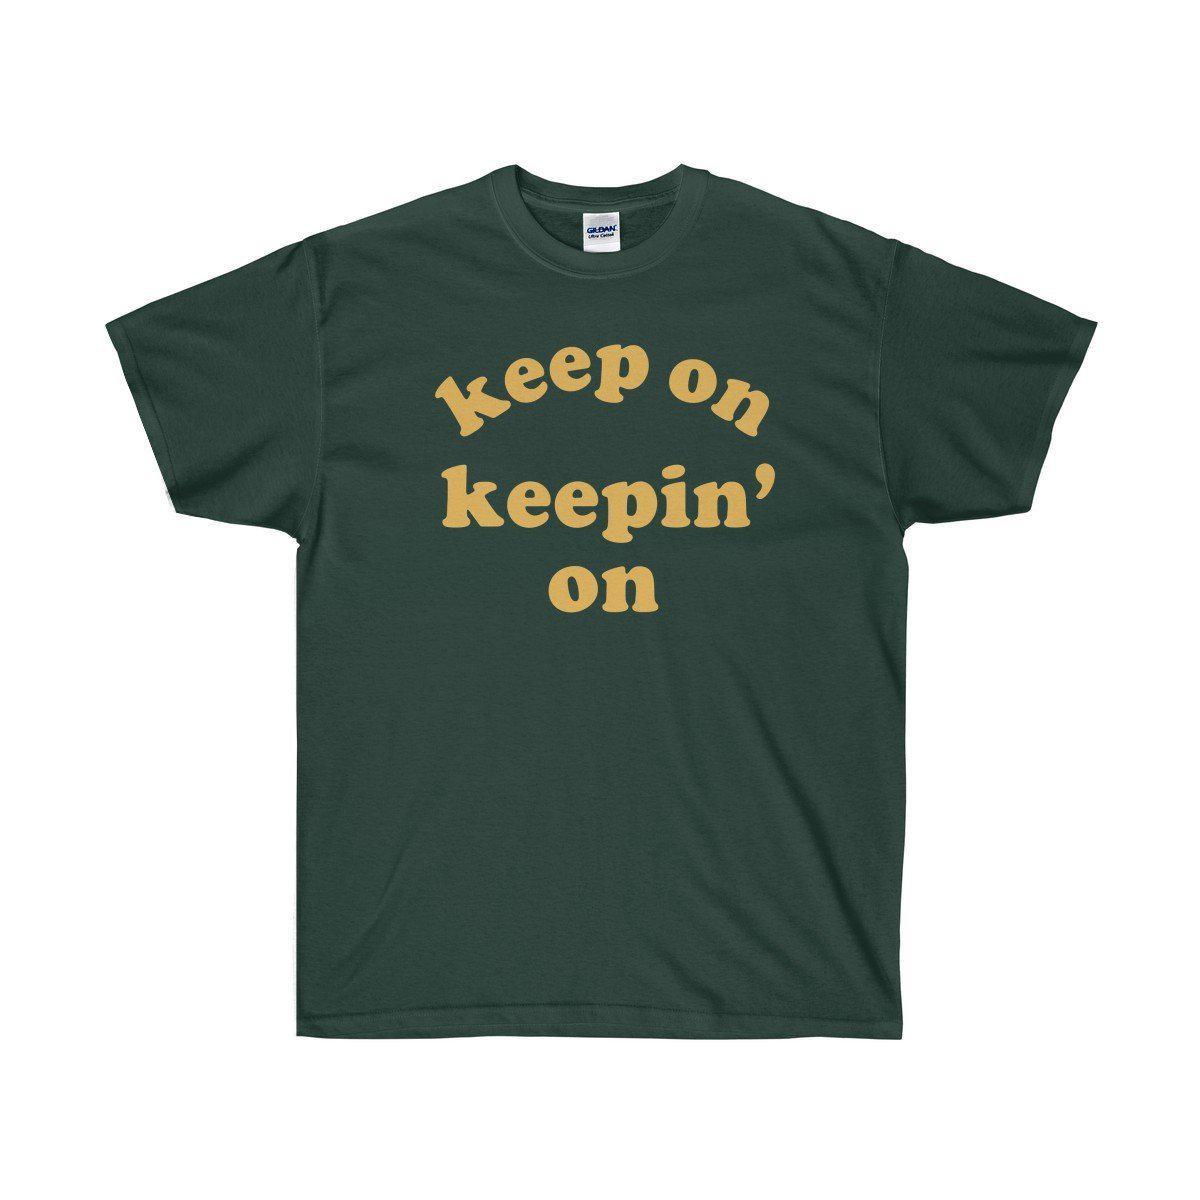 Keep On Keepin' On Tee - Atlanta Childish Gambino TV Show Earn Inspired-Forest Green-S-Archethype